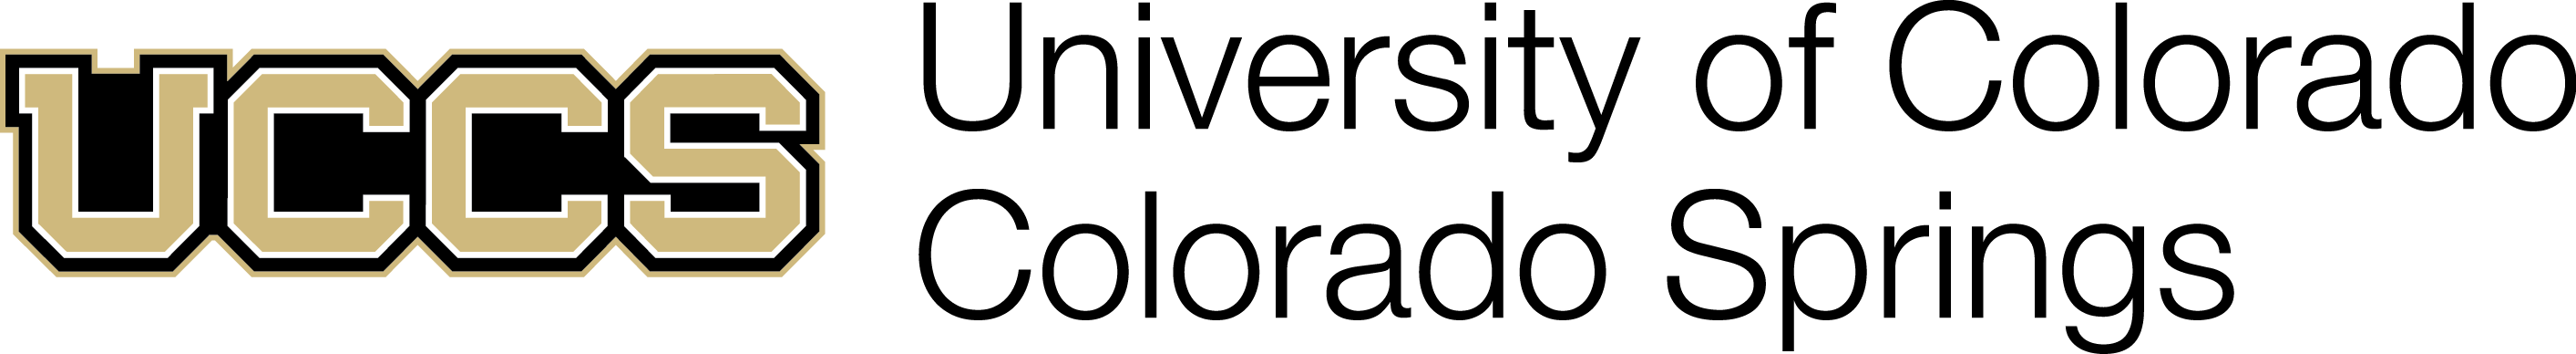 UCCS logo